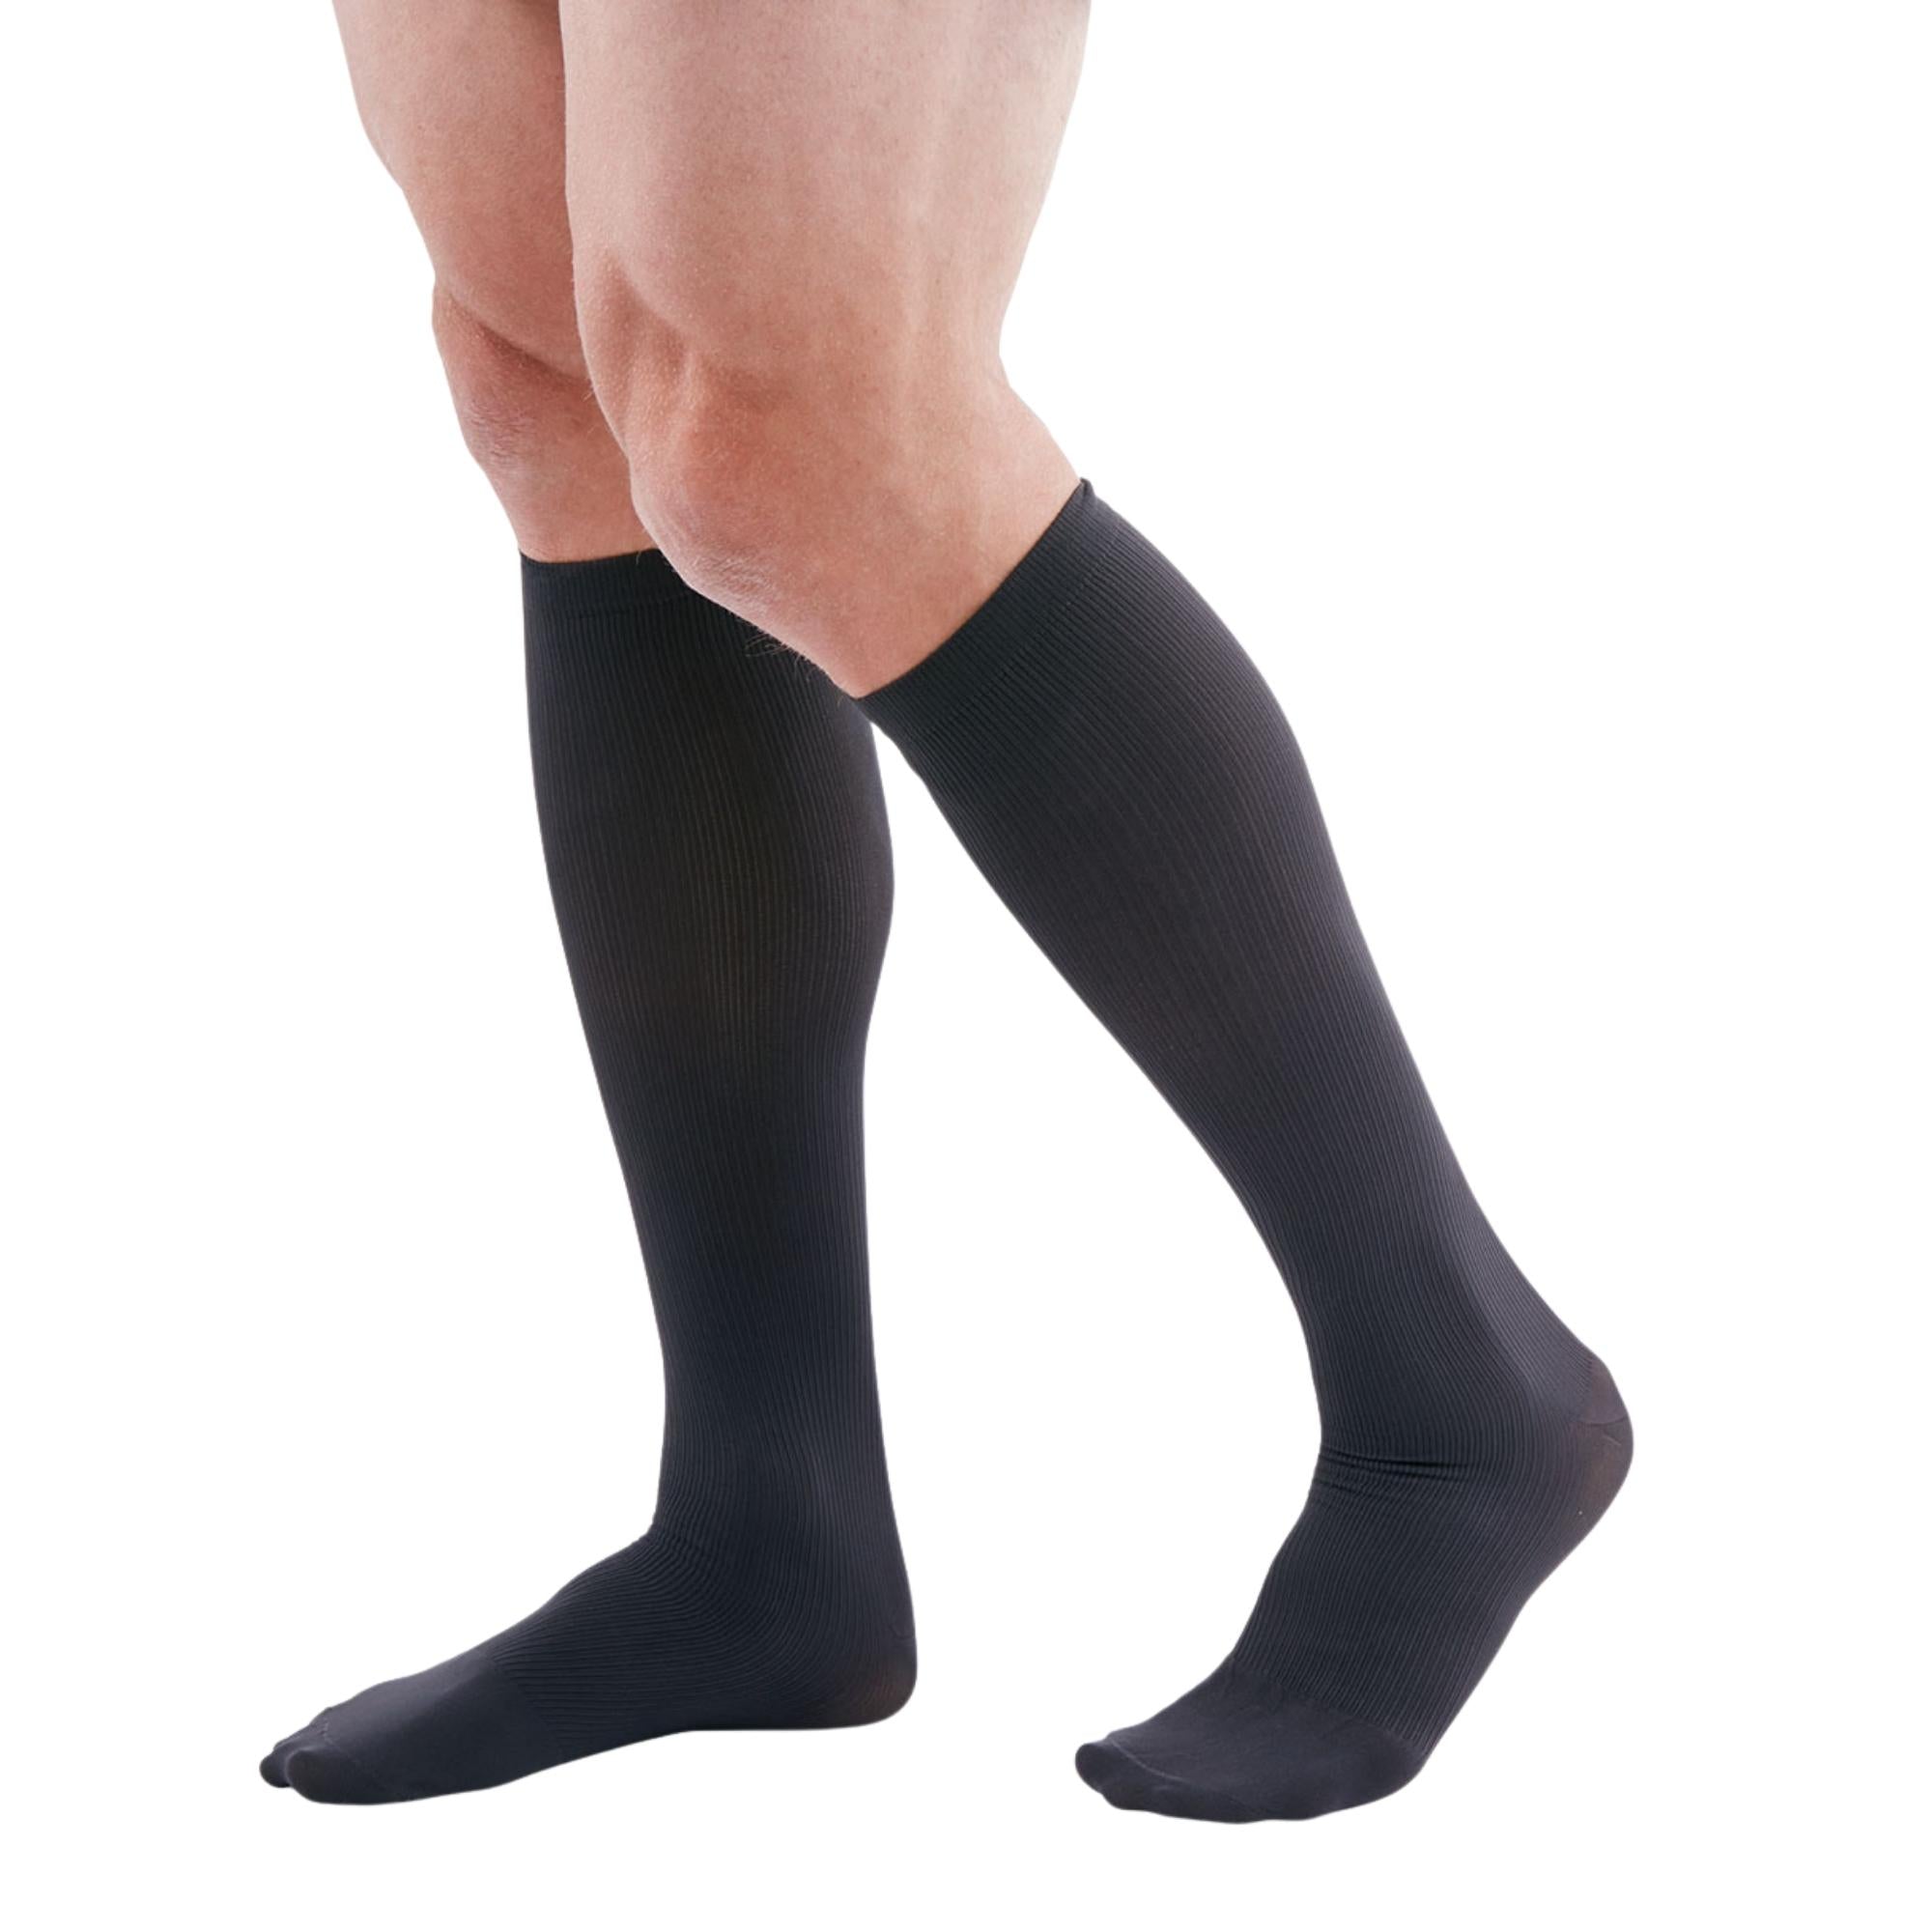 mediven for men classic 8-15 mmHg Calf High Closed Toe Compression Stockings